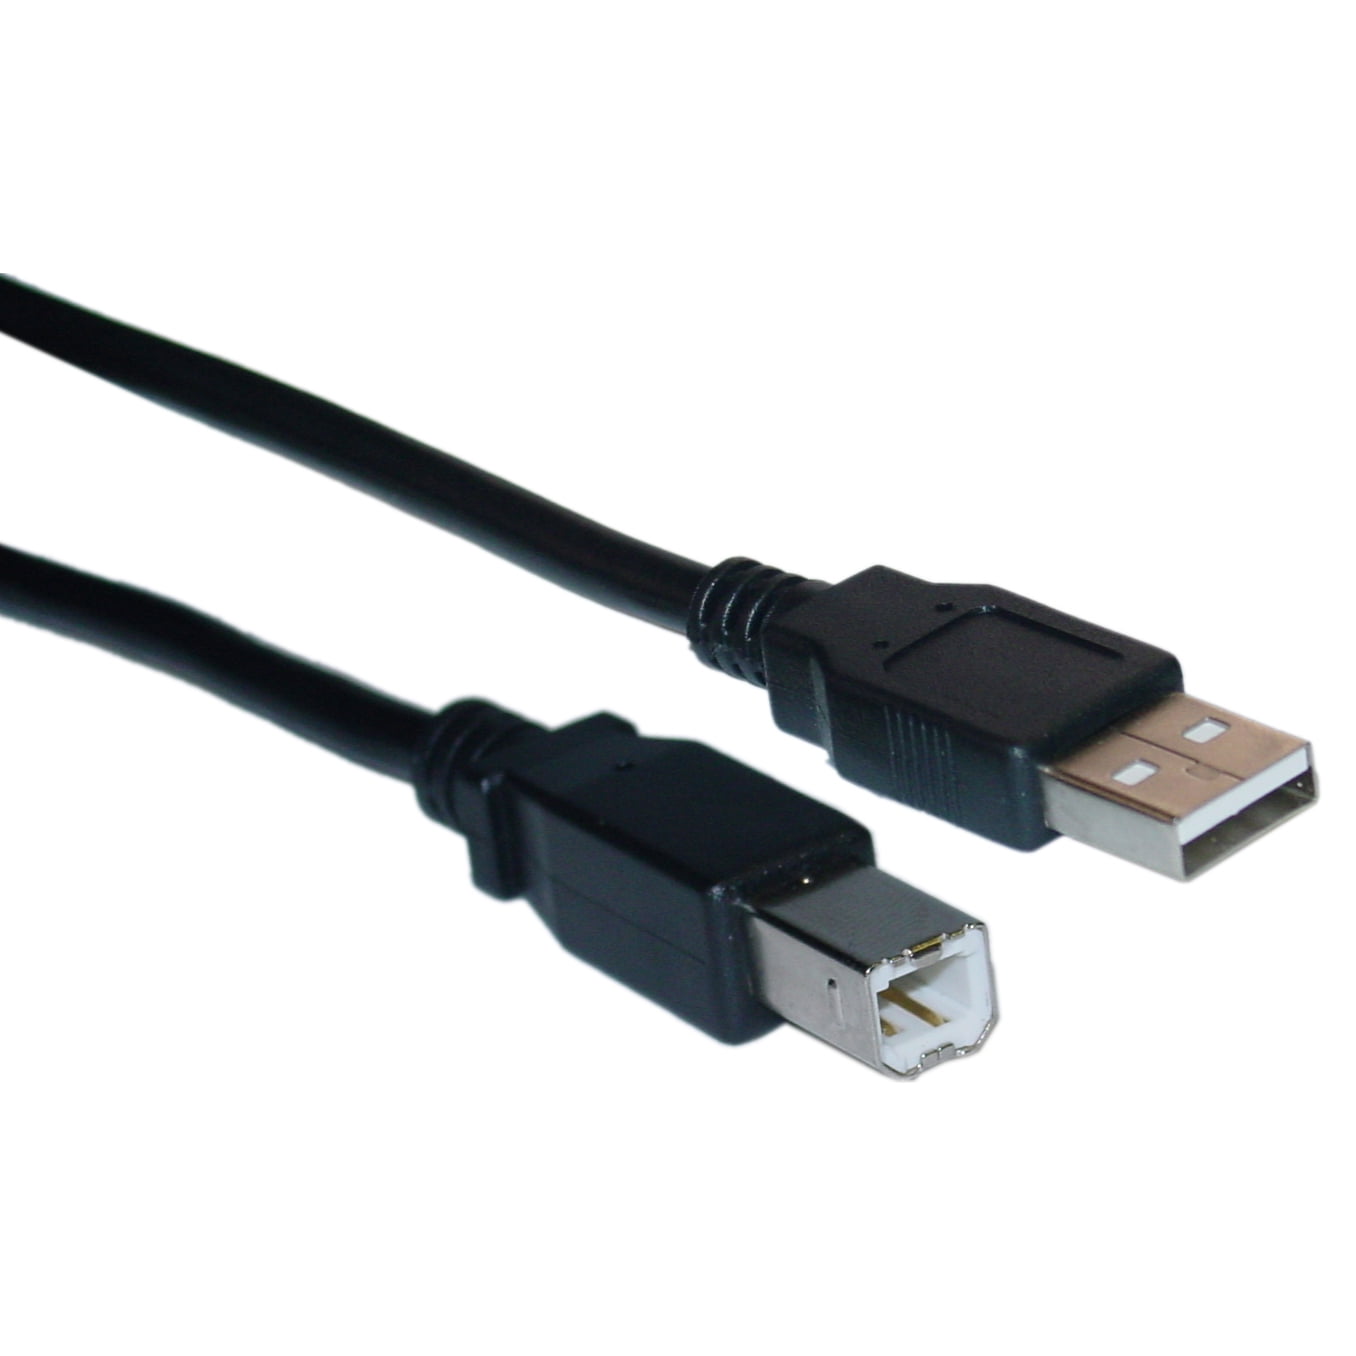 Eopzol 10ft USB 2.0 Printer Cable Type A Male to B Male Cord for XYZprinting da Vinci Mini Maker 3D Printer 